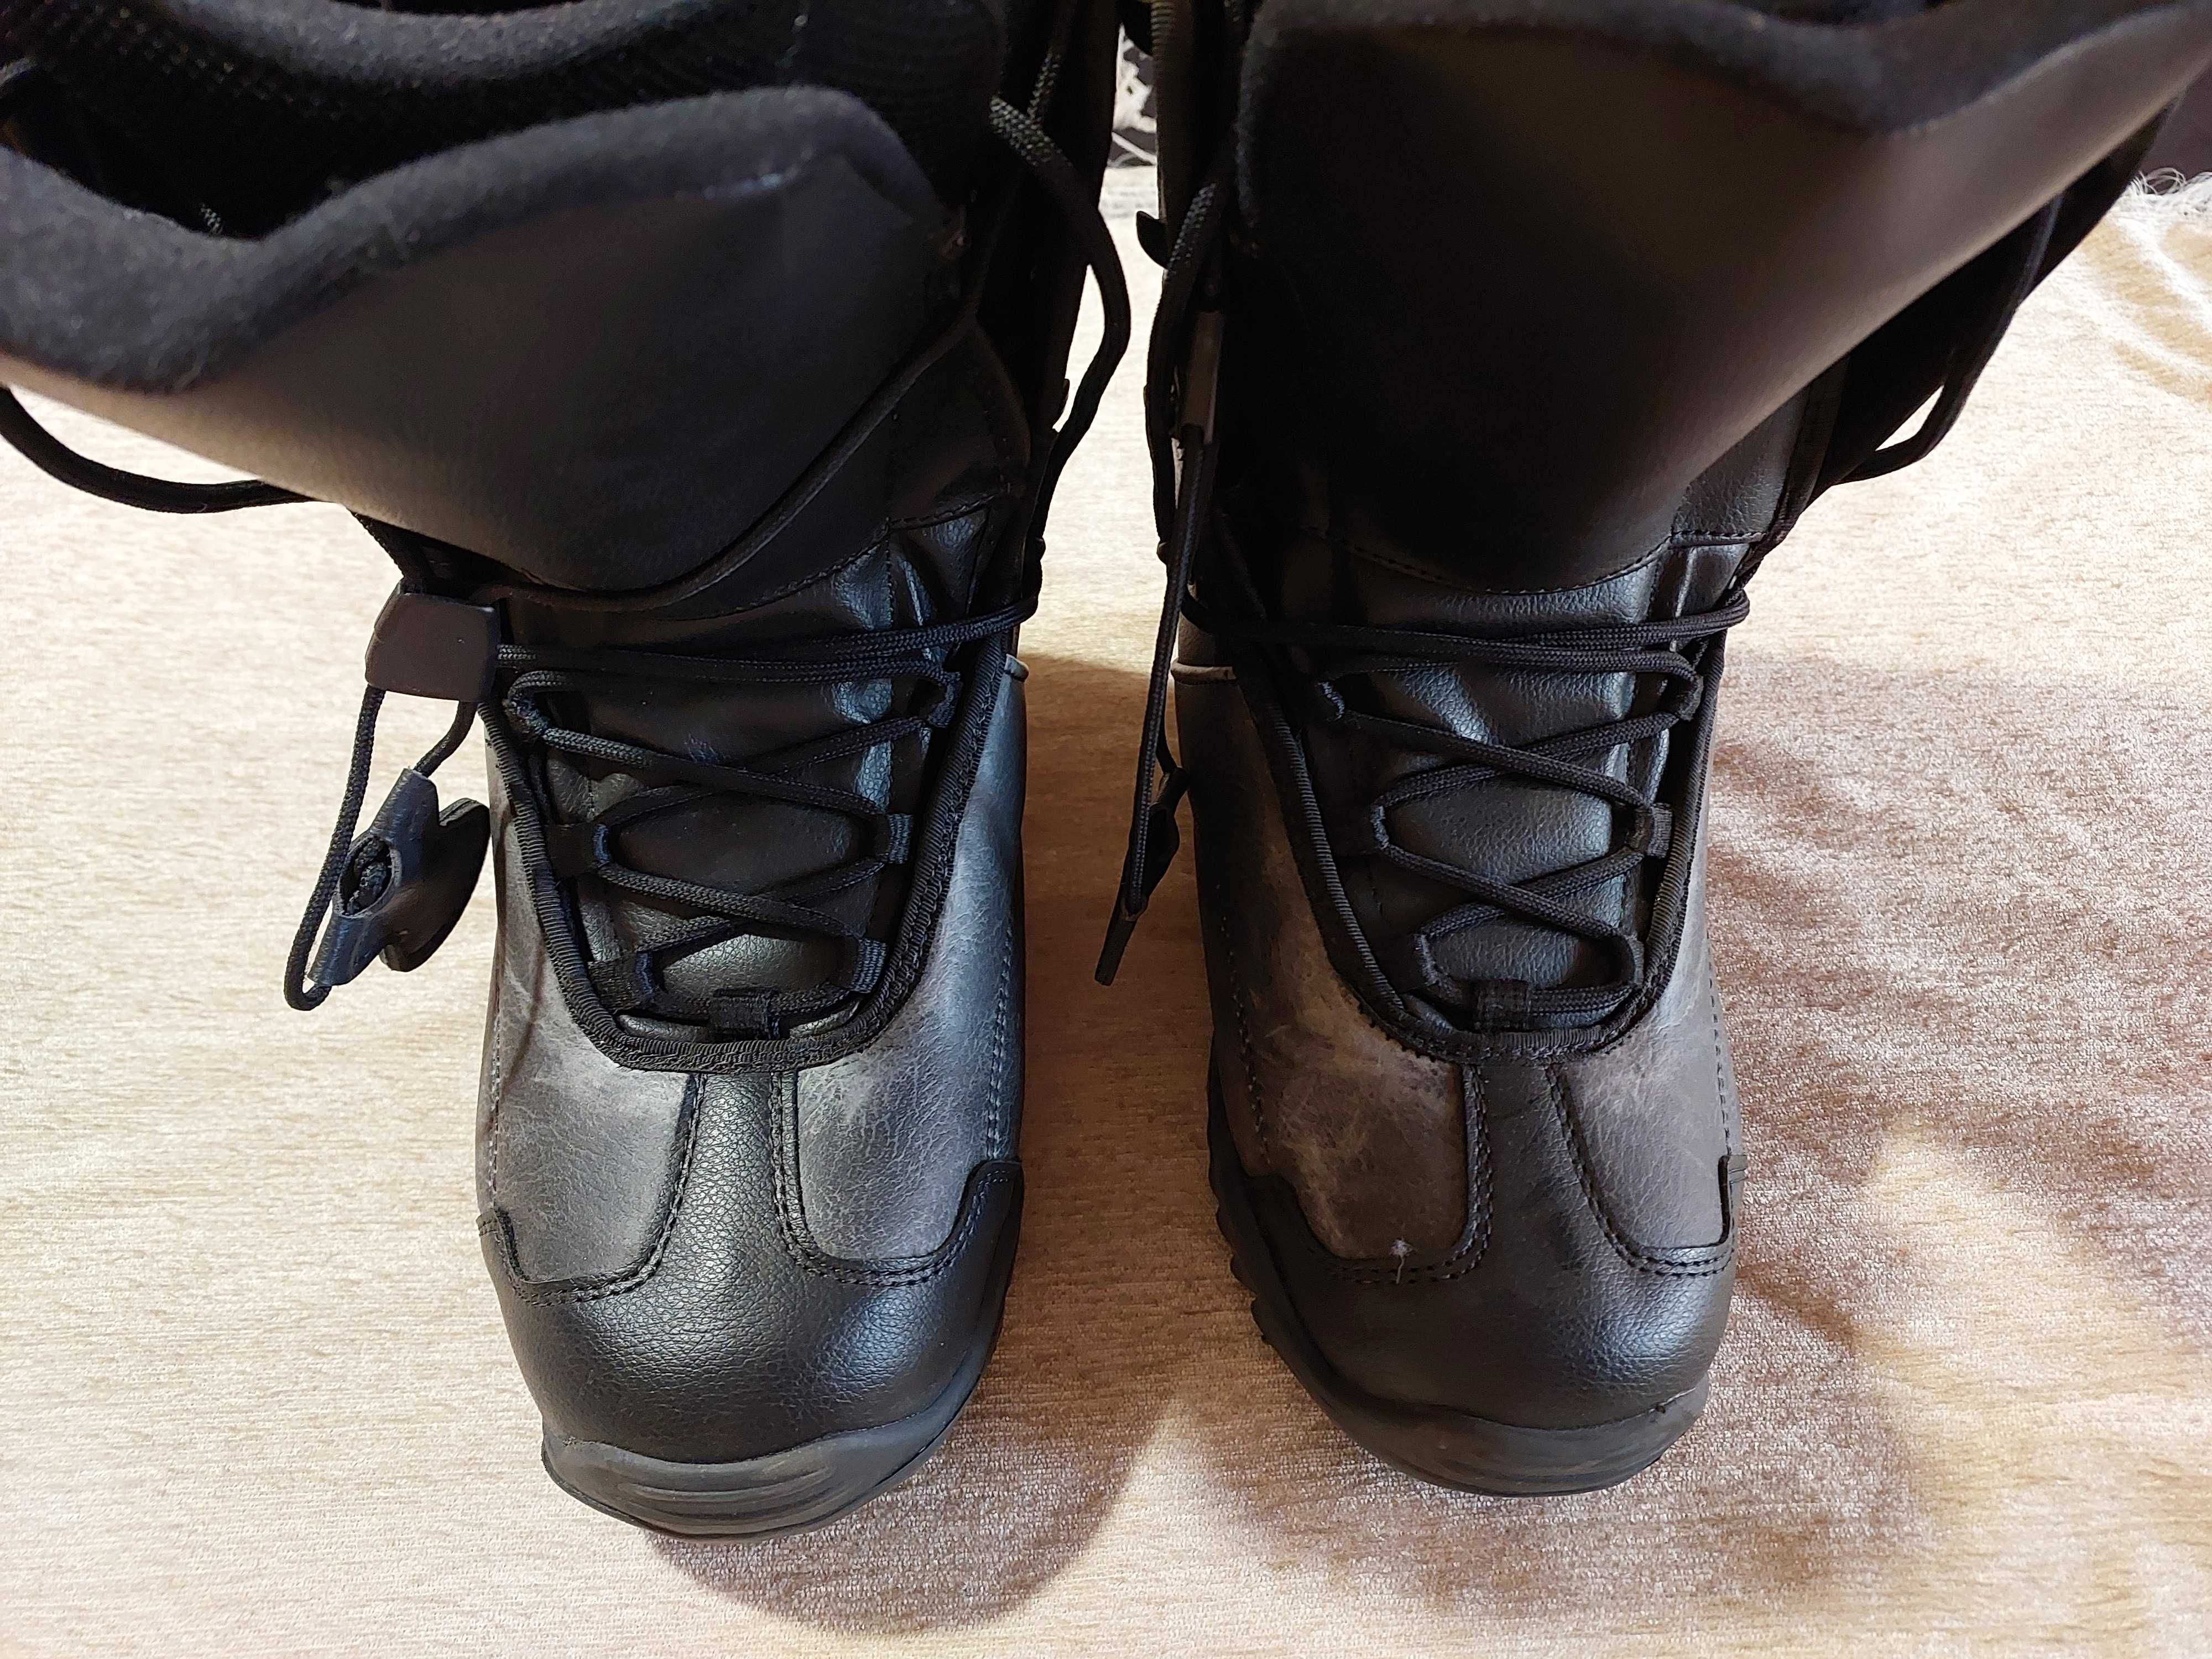 Ботинки для сноуборда Maxorive р.42-43 по стельке 27,5-28 см